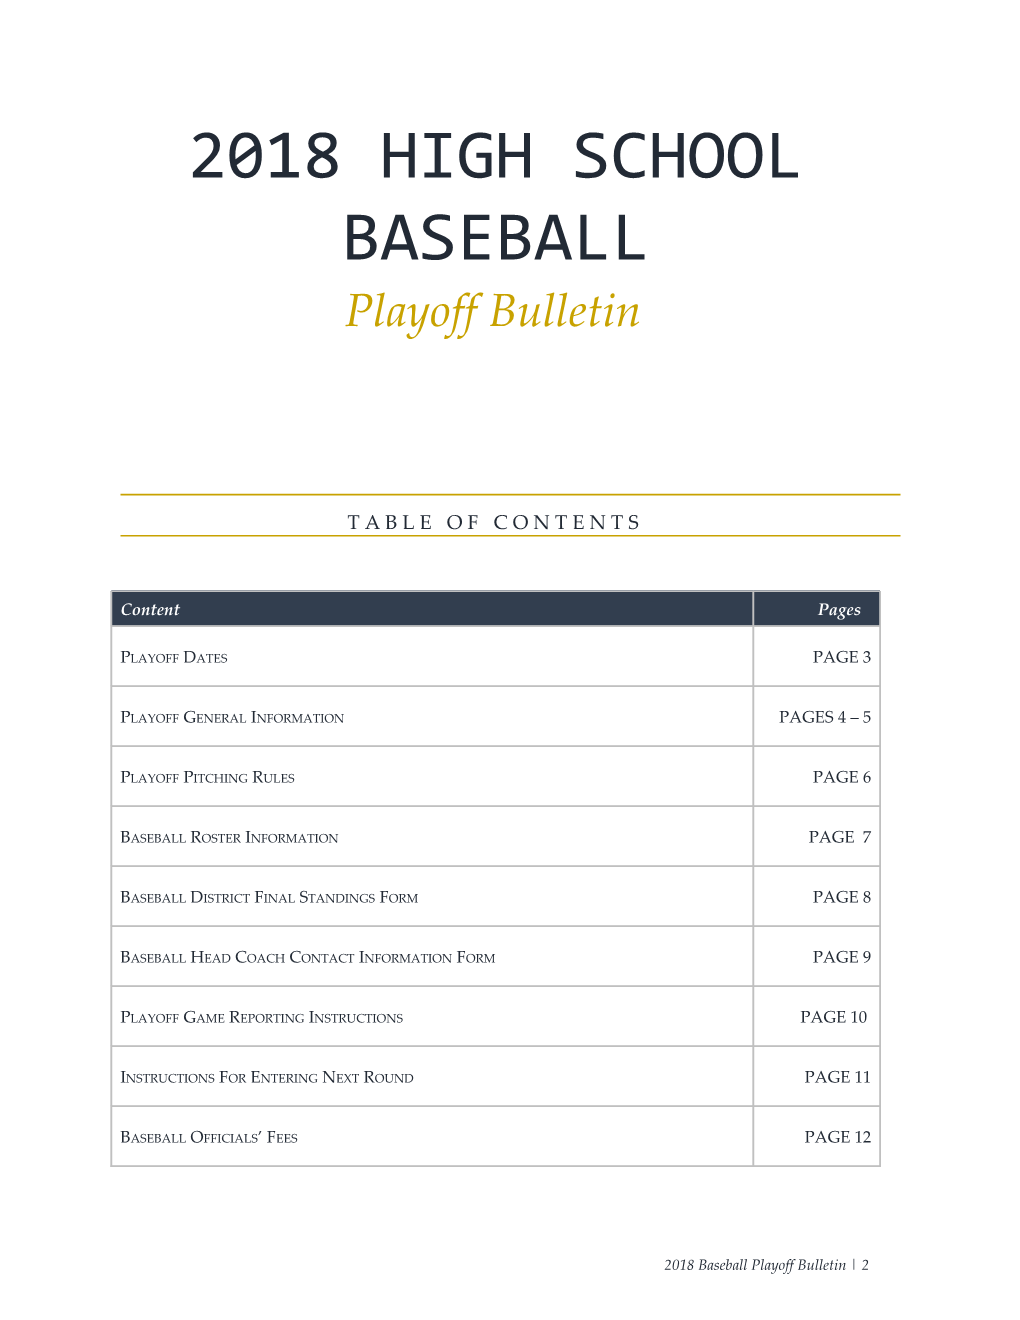 2018 High School Baseball